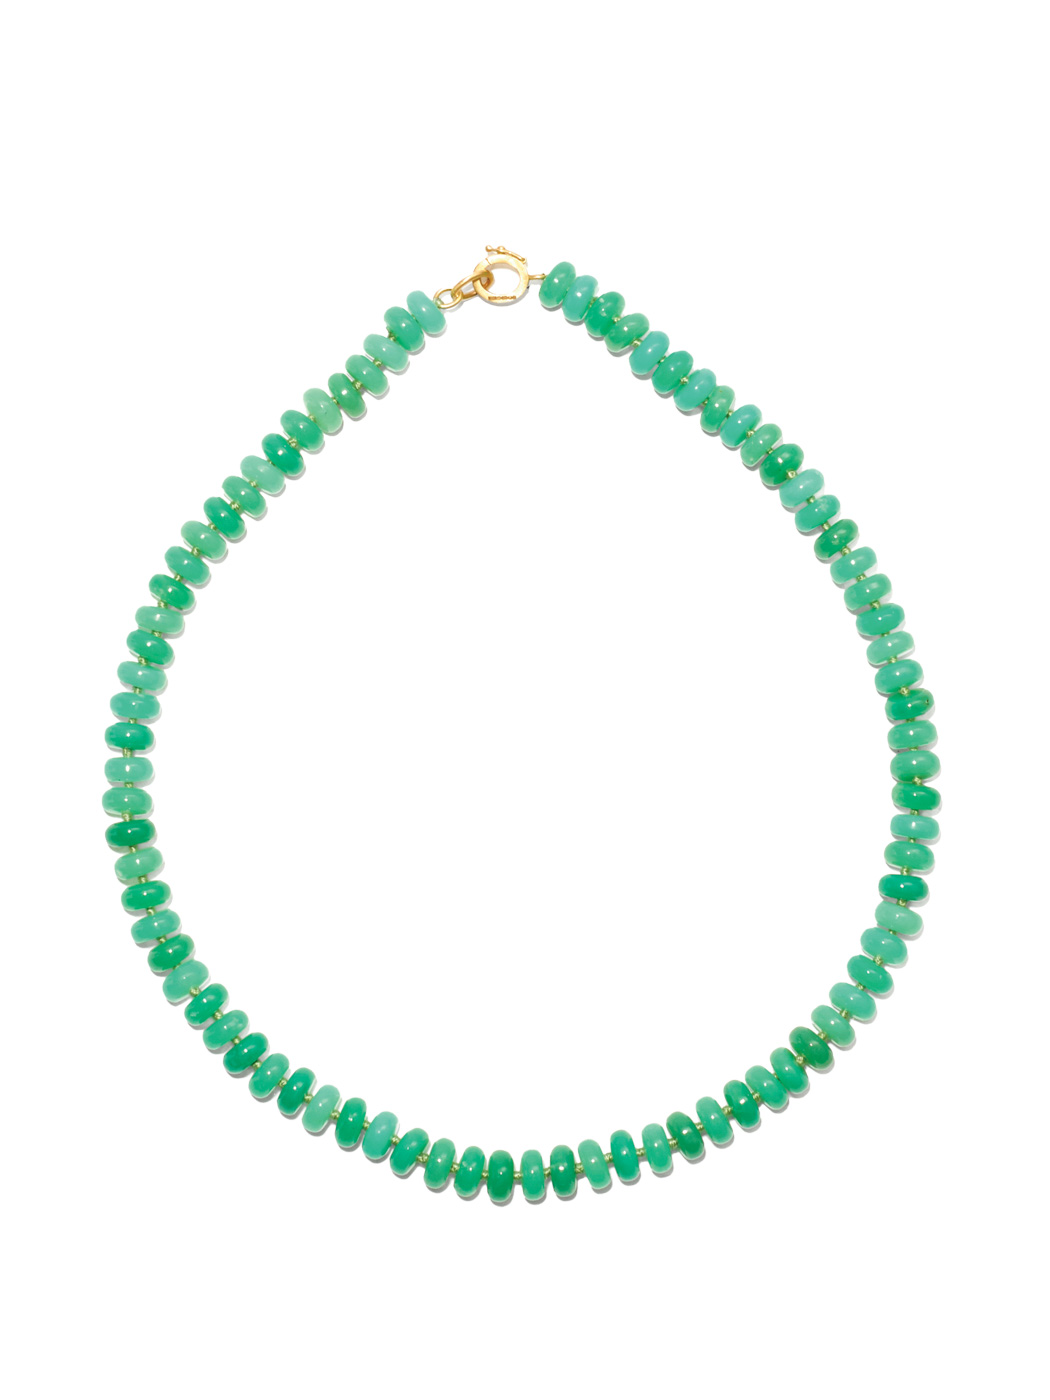 34 Irene Neuwirth, Candy Turquoise & 18kt Gold Necklace, Matchesfashion.com Us